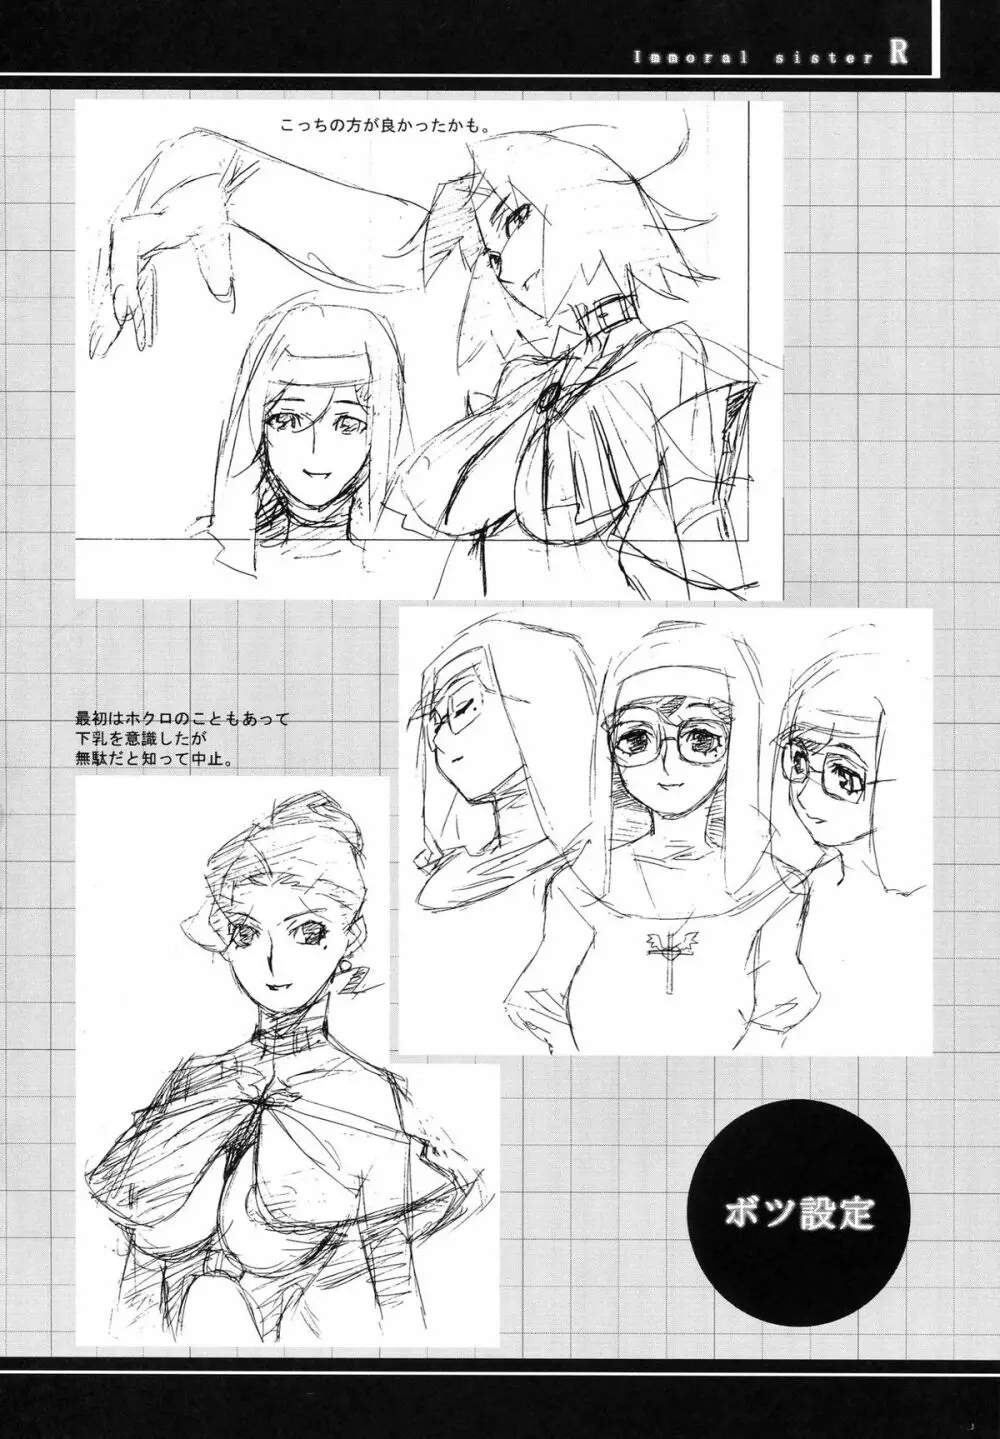 Immoral sister R 原画集 54ページ